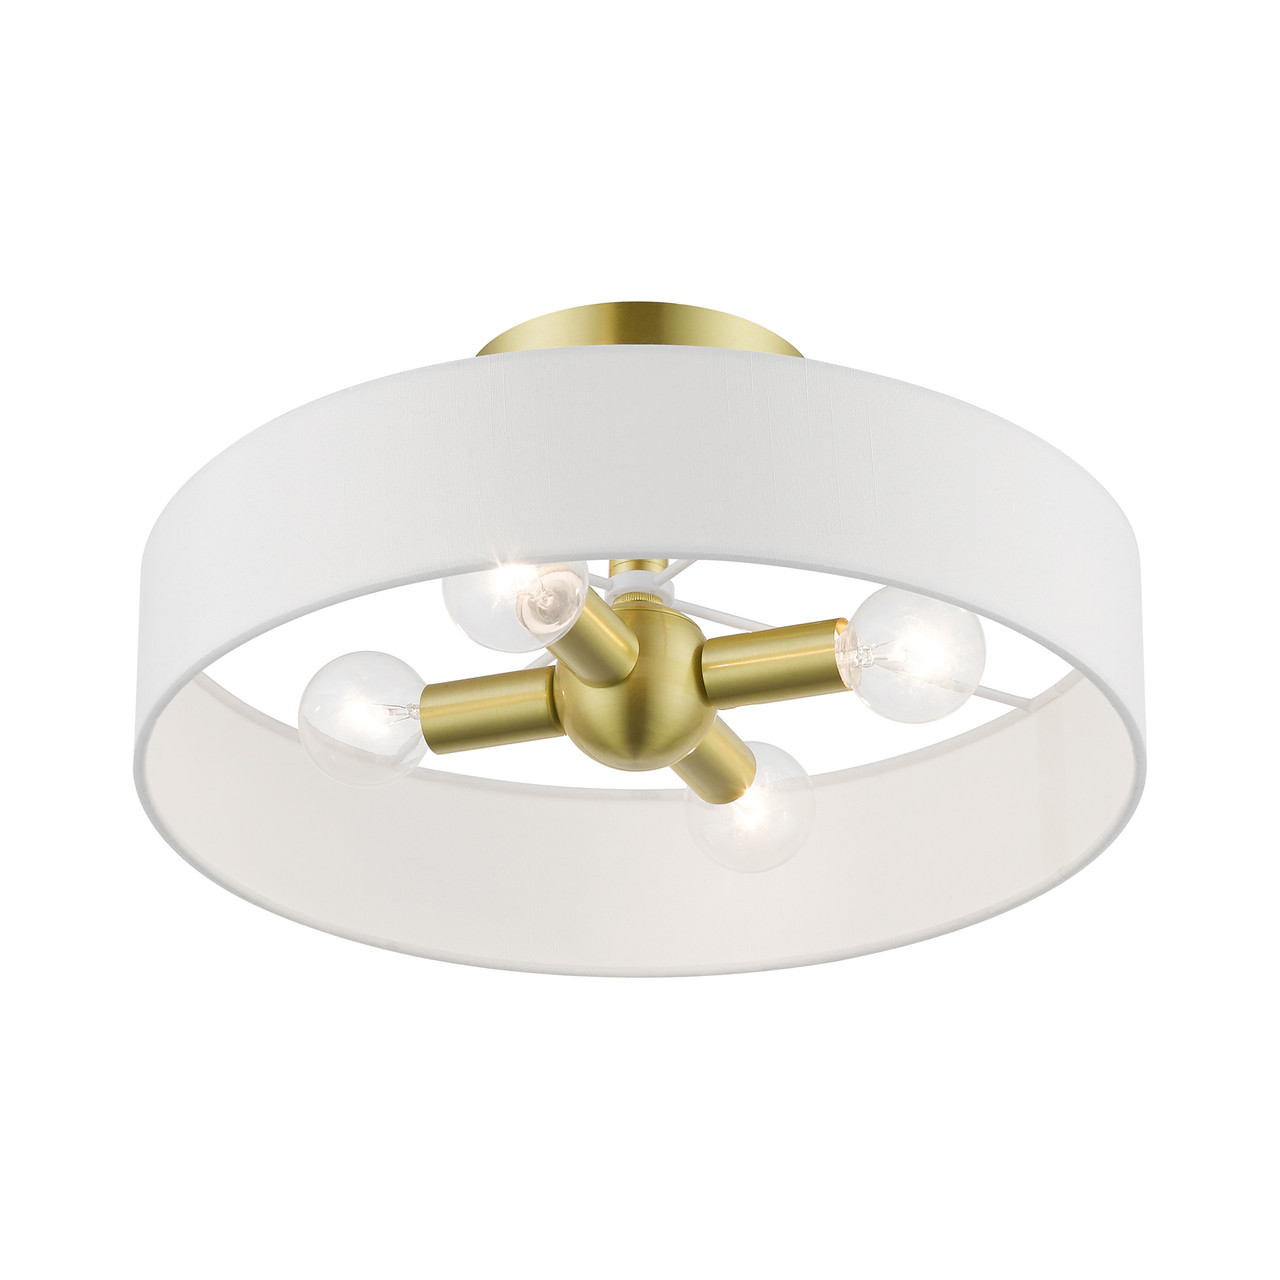 LIVEX LIGHTING 46927-12 4 Light Satin Brass with Shiny White Accents Semi-Flush